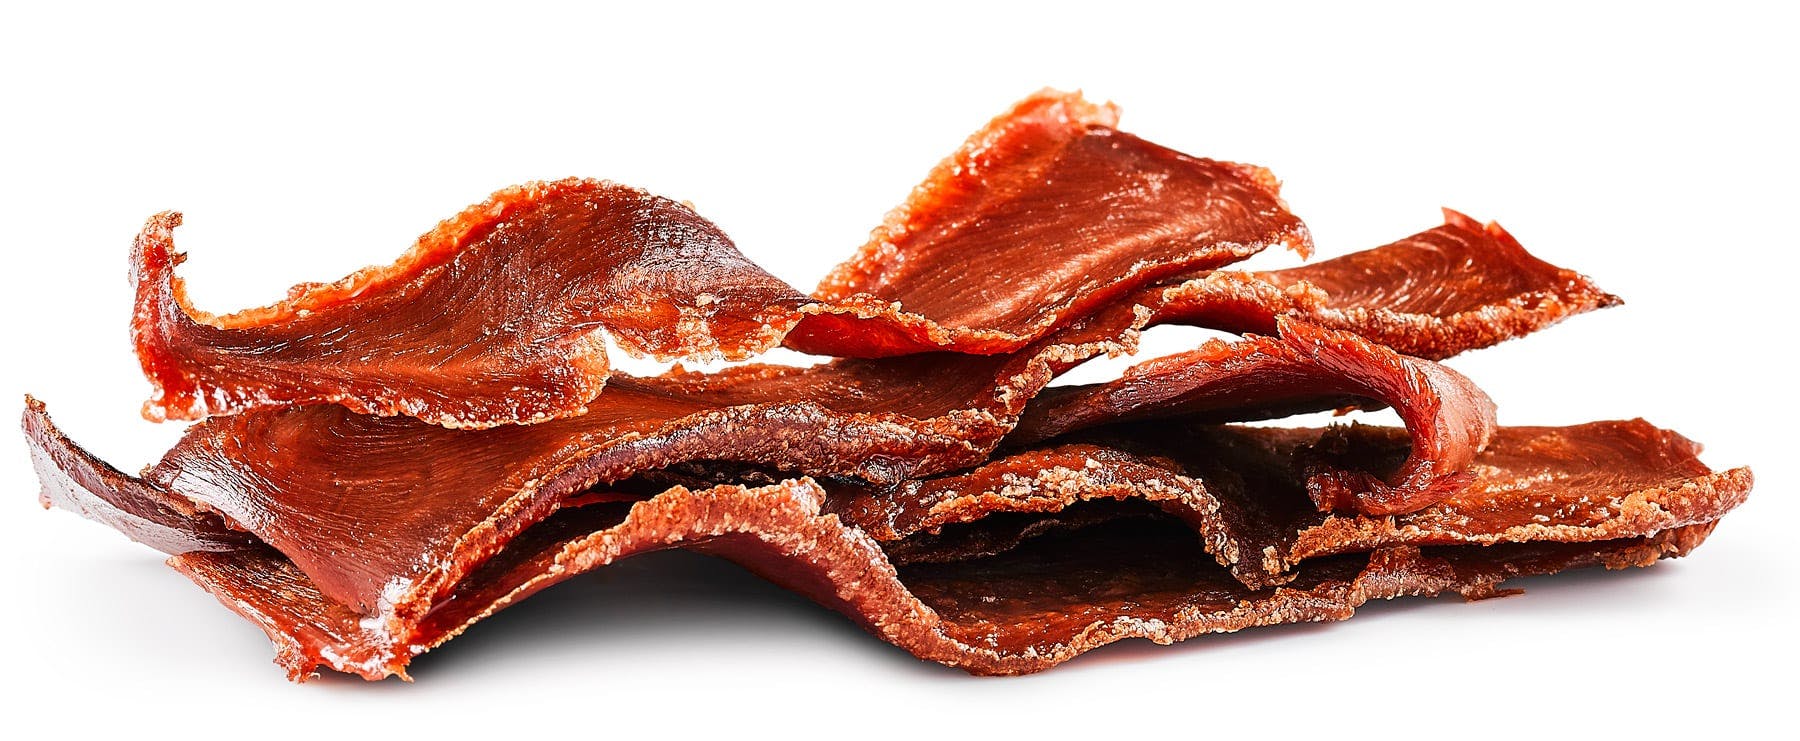 crispy vegan bacon rashers